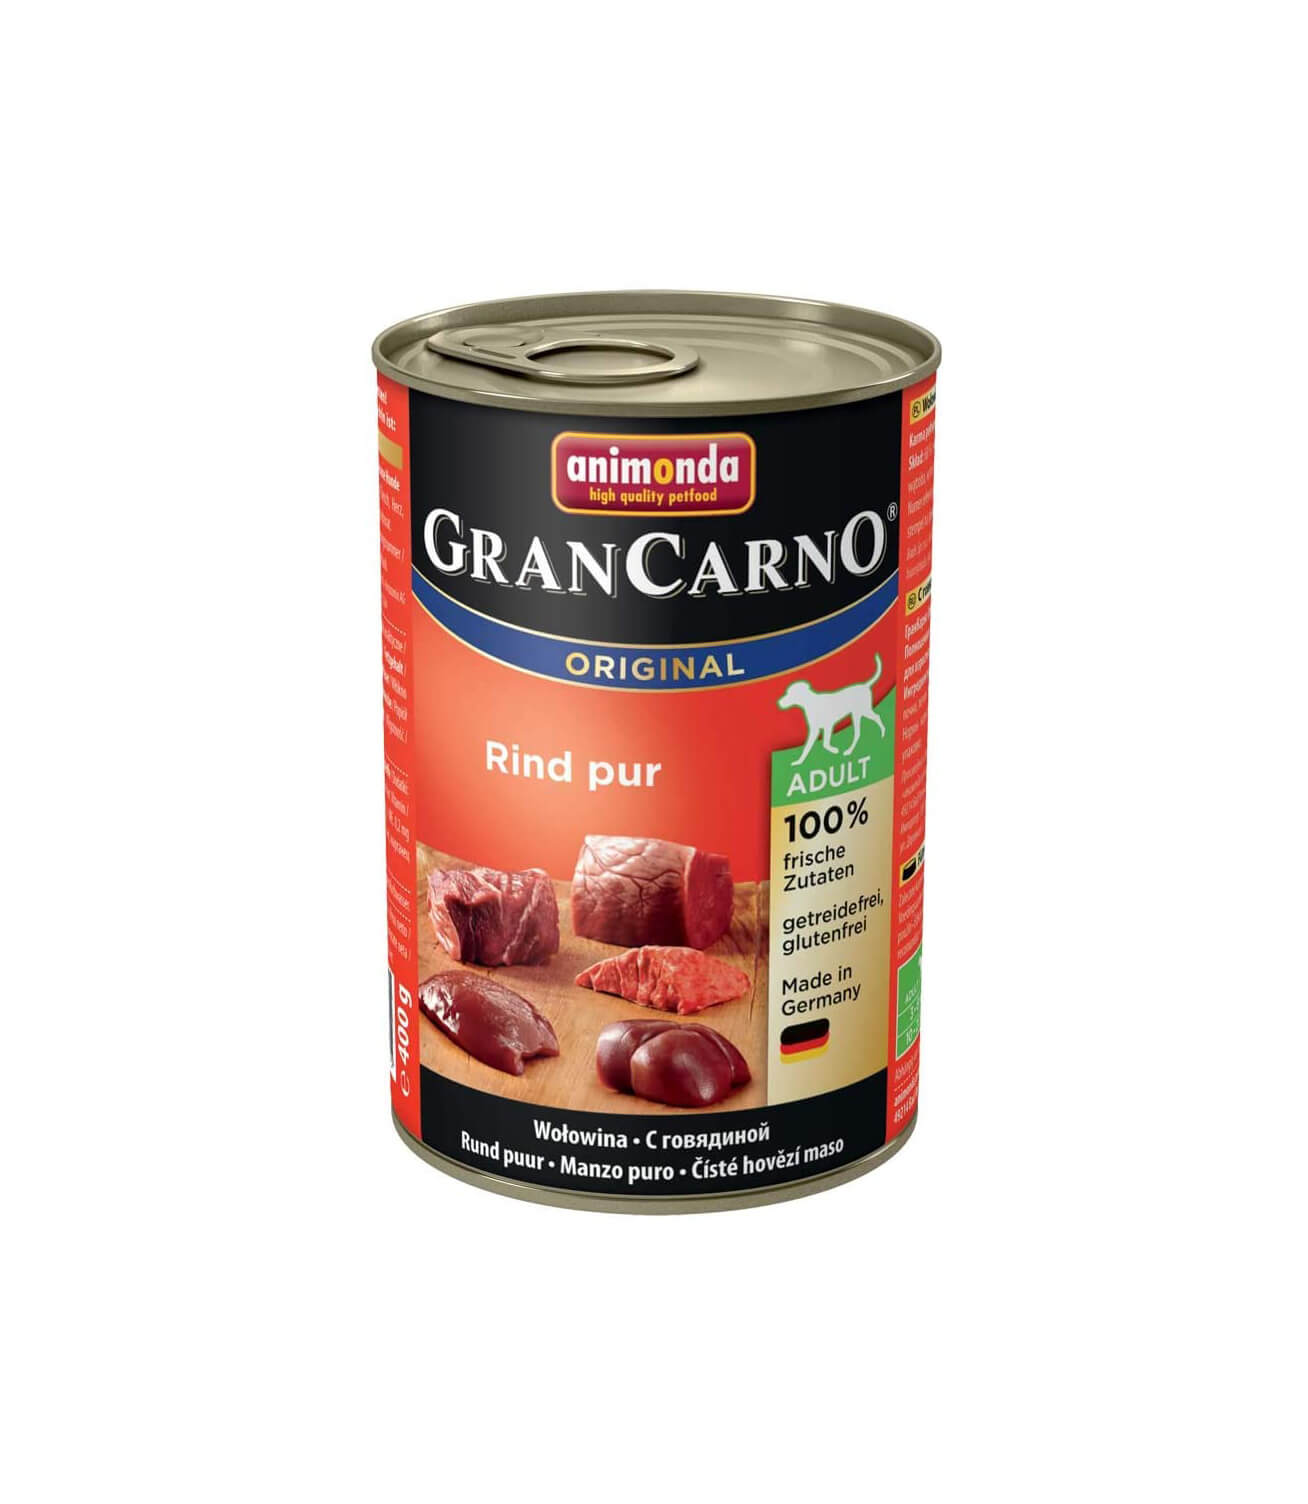 Animonda Gran Carno Hundefutter Adult Rind pur, 400 g